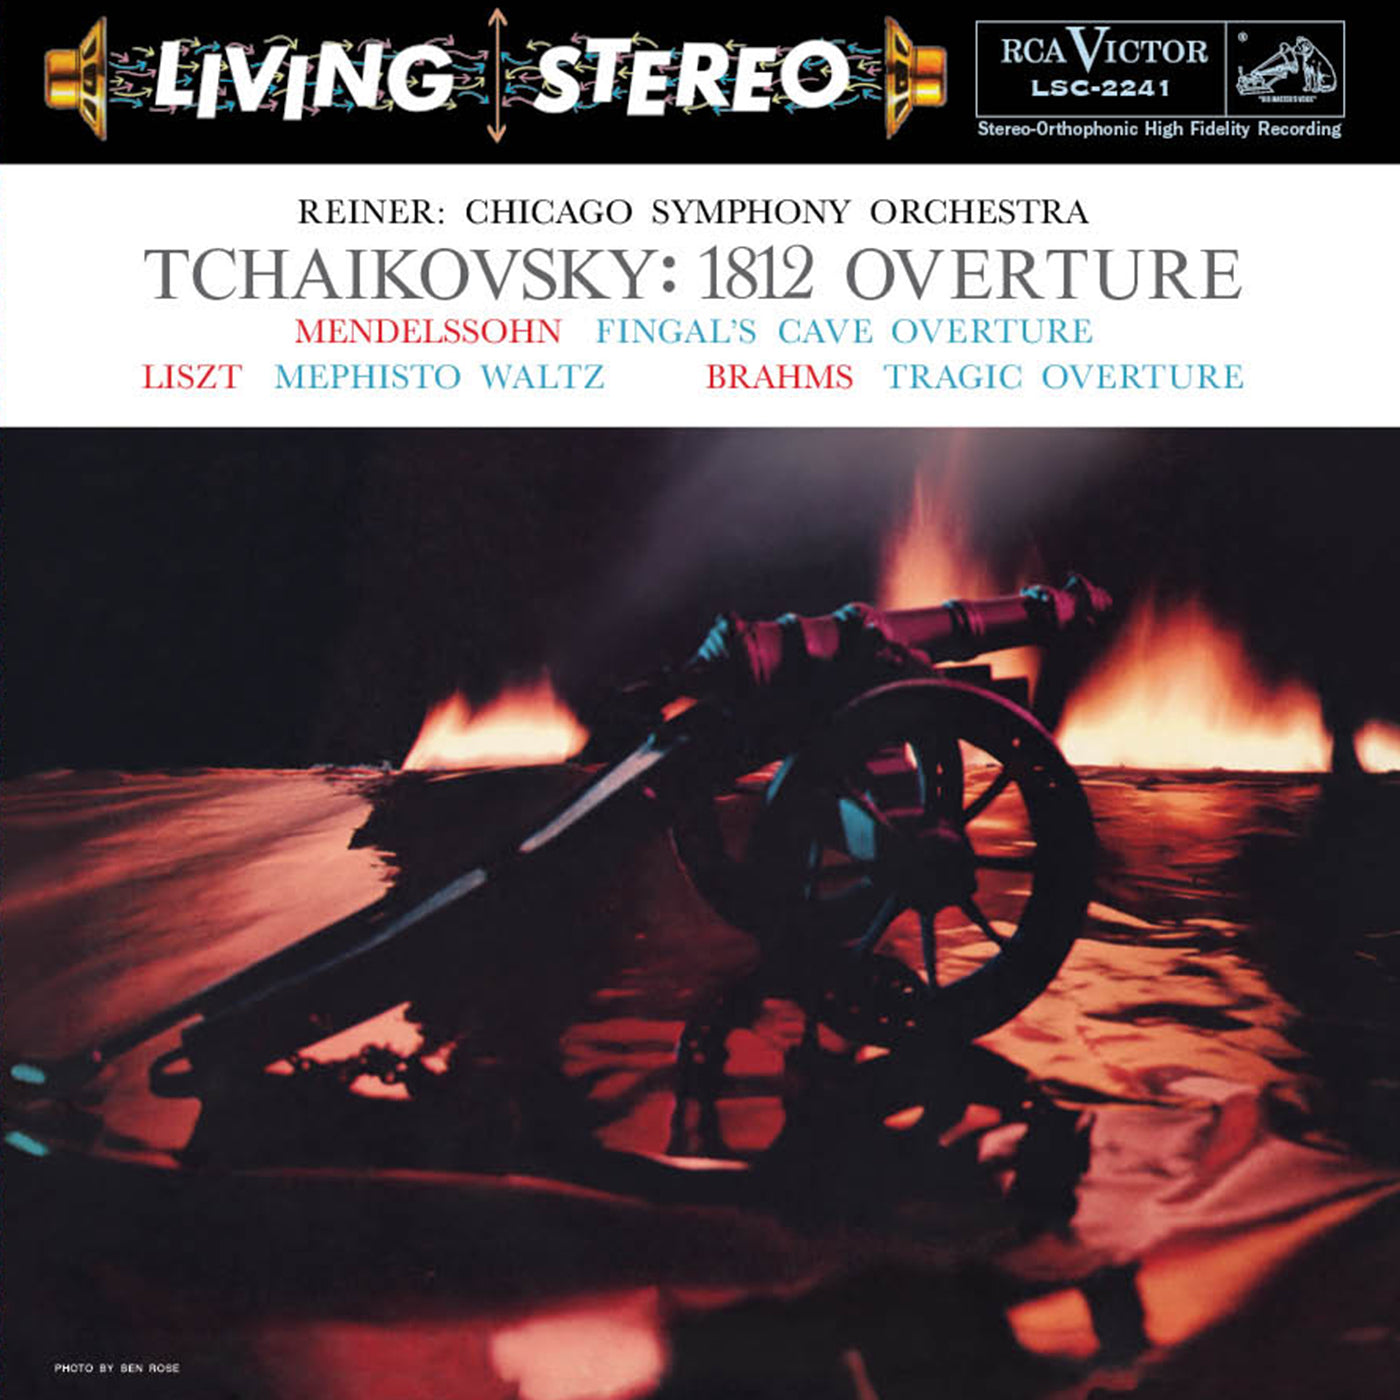 Fritz Reiner - Tchaikovsky: 1812 Overture  (Chicago Symphony Orchestra)